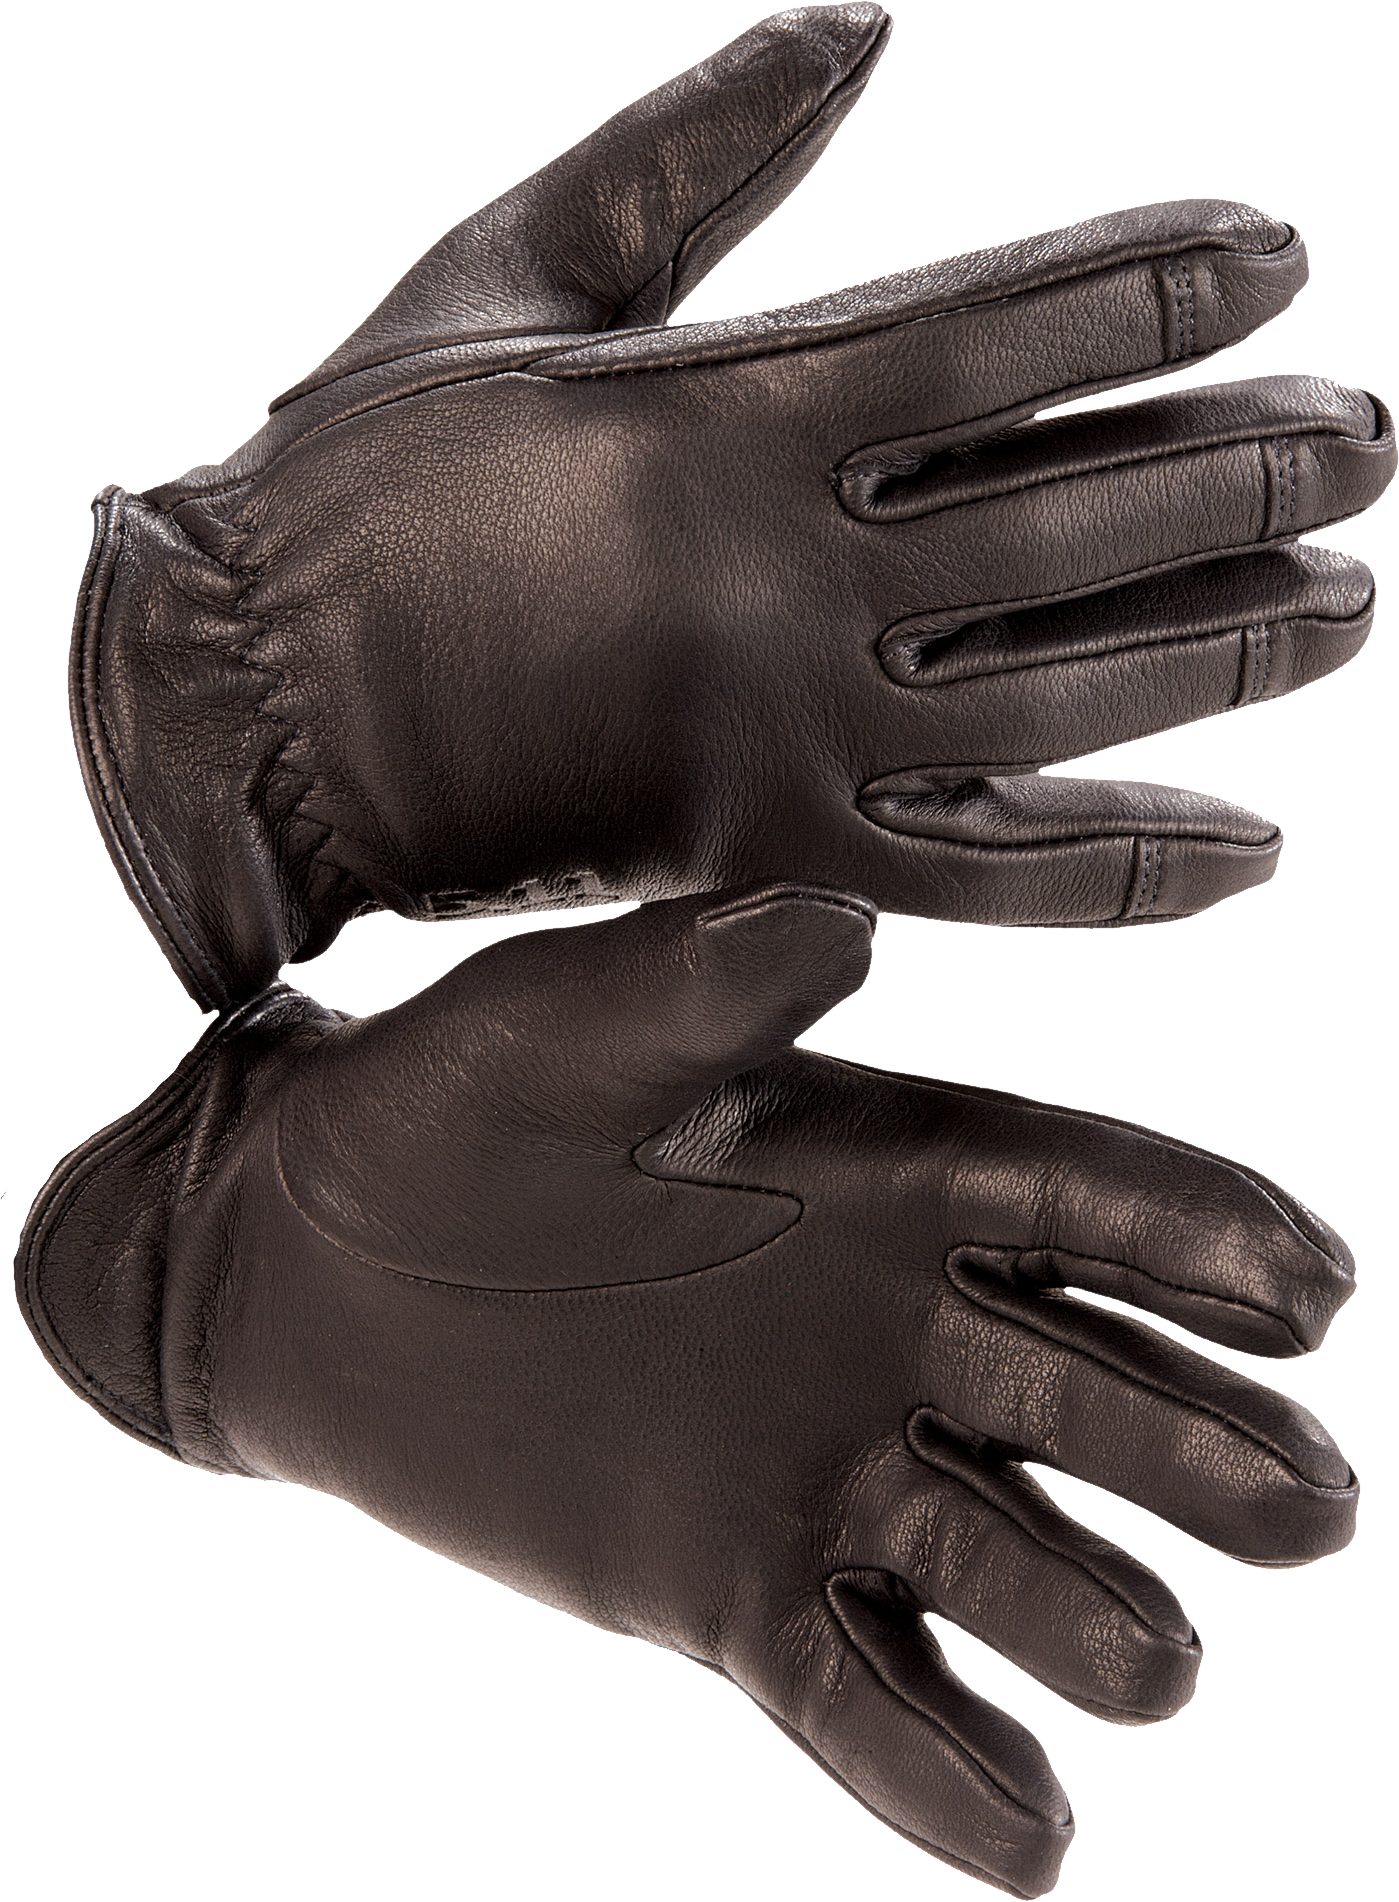 glove clipart leather glove